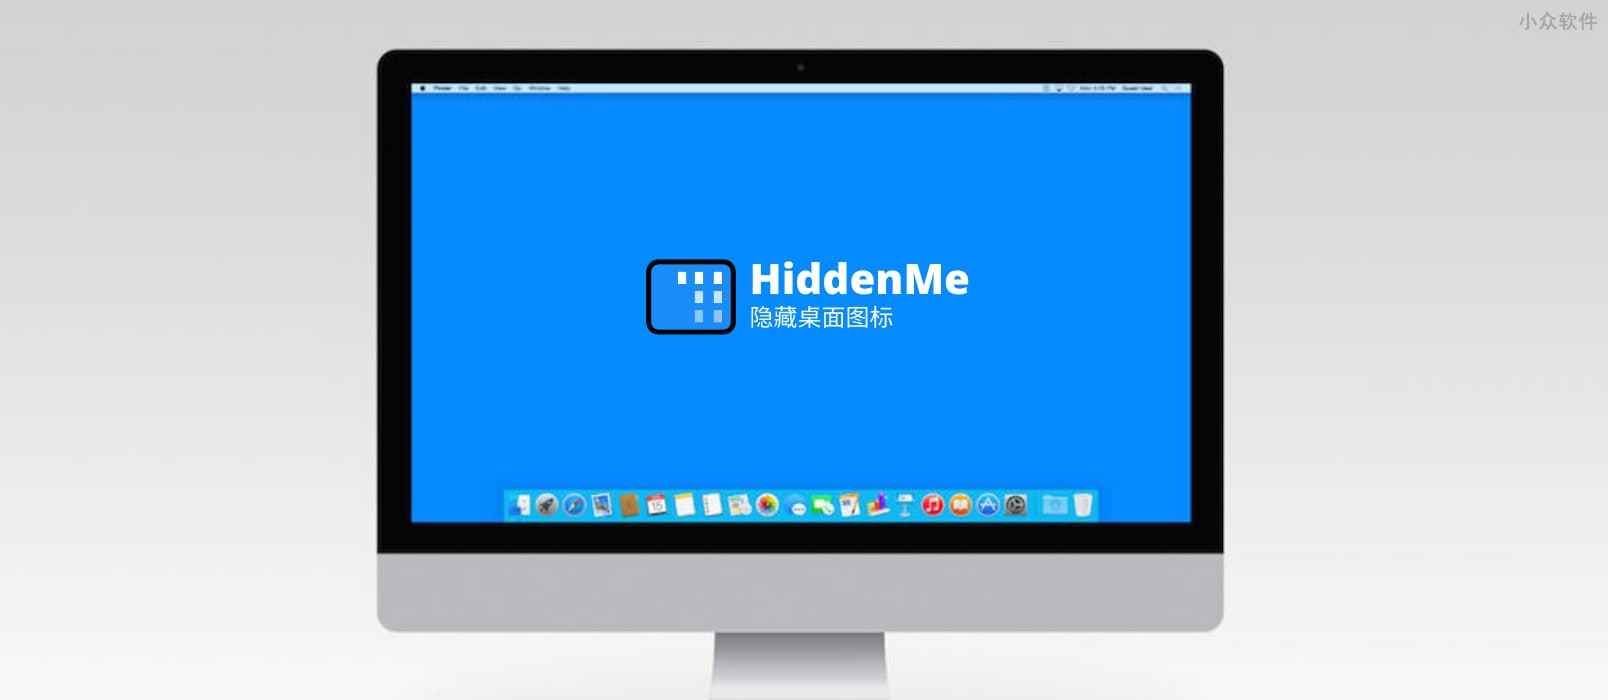 HiddenMe – 快速隐藏 macOS 桌面所有图标、文件